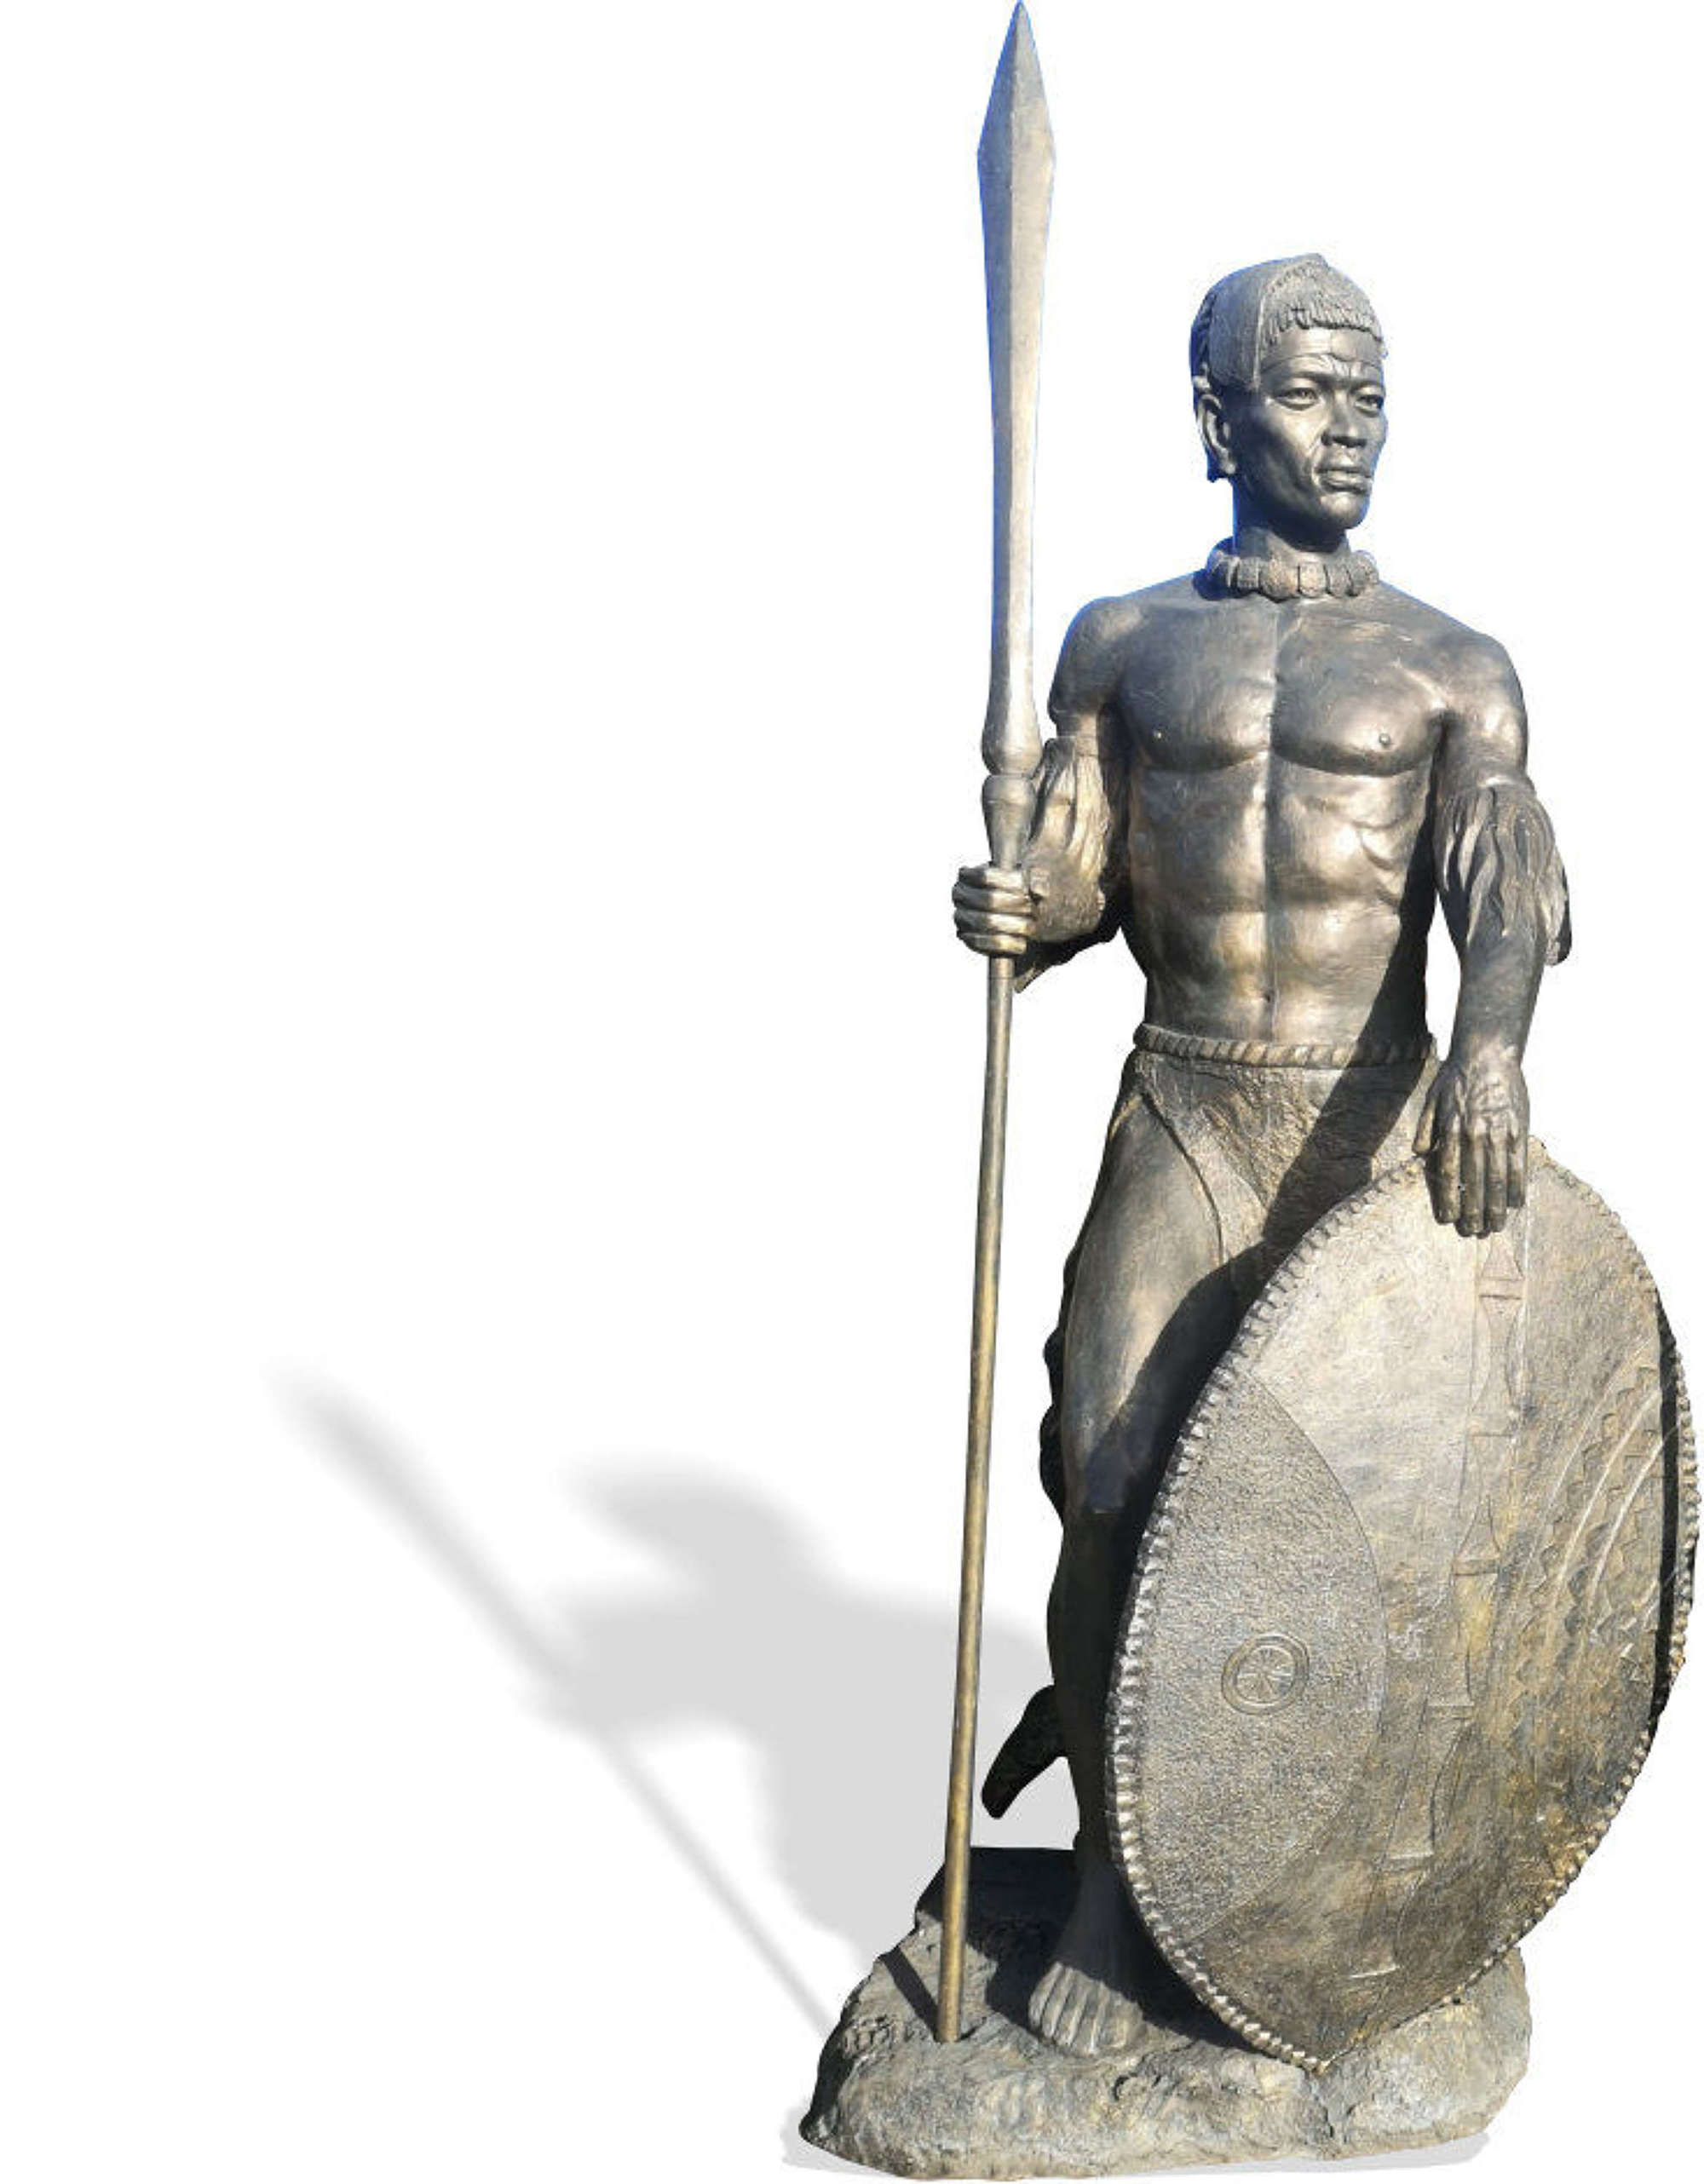 Impressive and Colossal fibreglass figure of Zulu Warrior